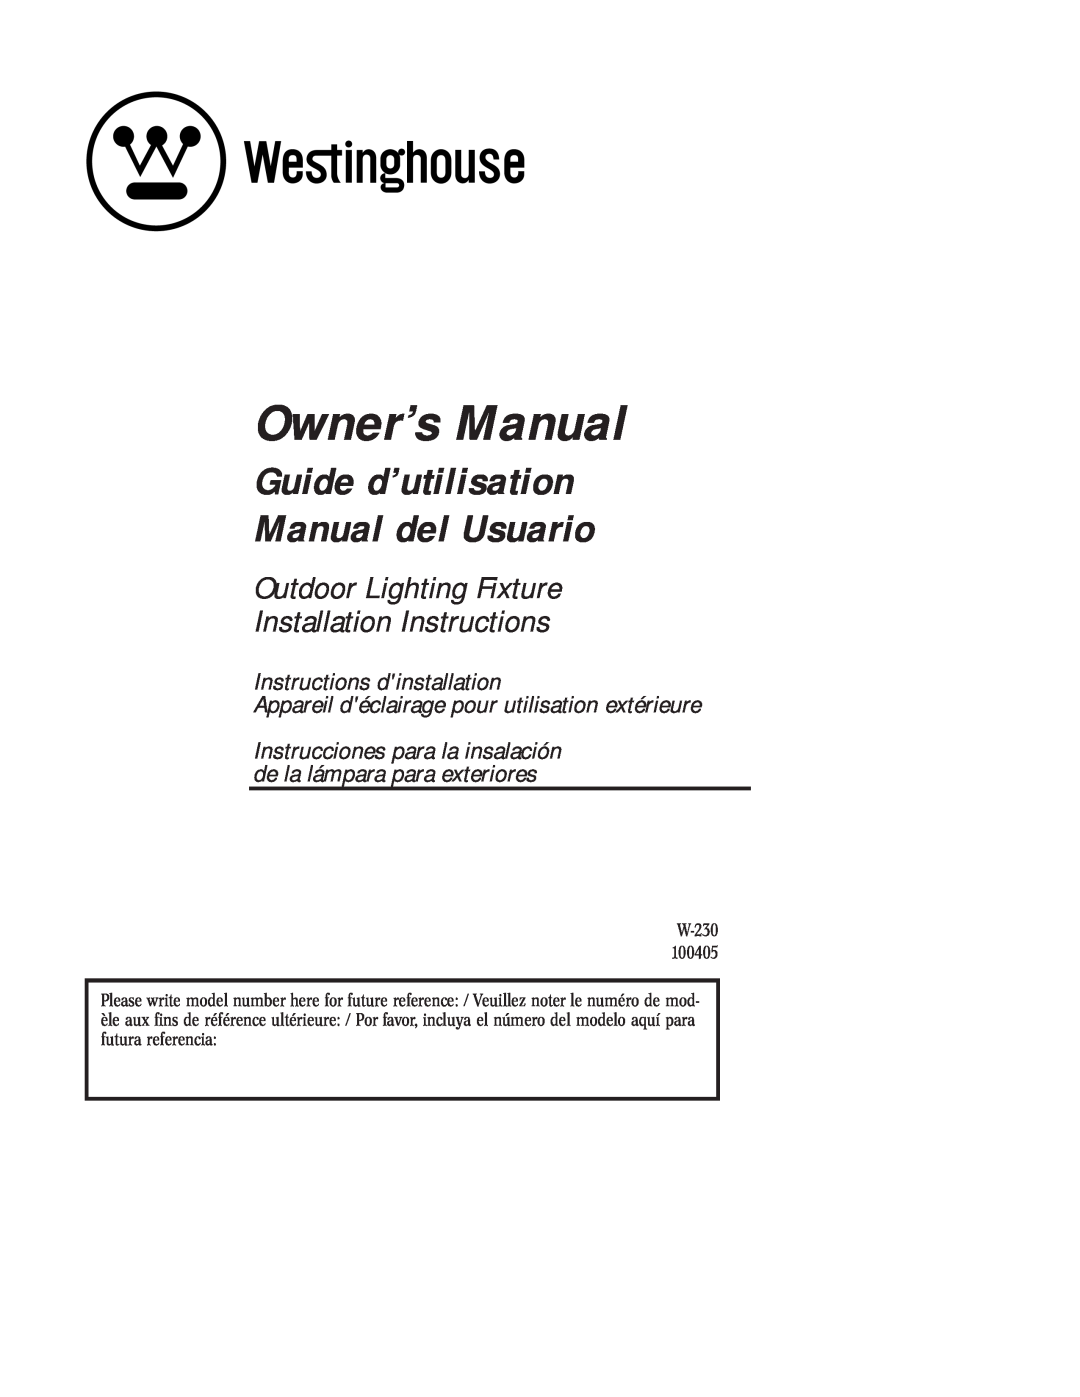 Westinghouse 100405 owner manual Owner’s Manual, Guide d’utilisation Manual del Usuario, Outdoor Lighting Fixture 